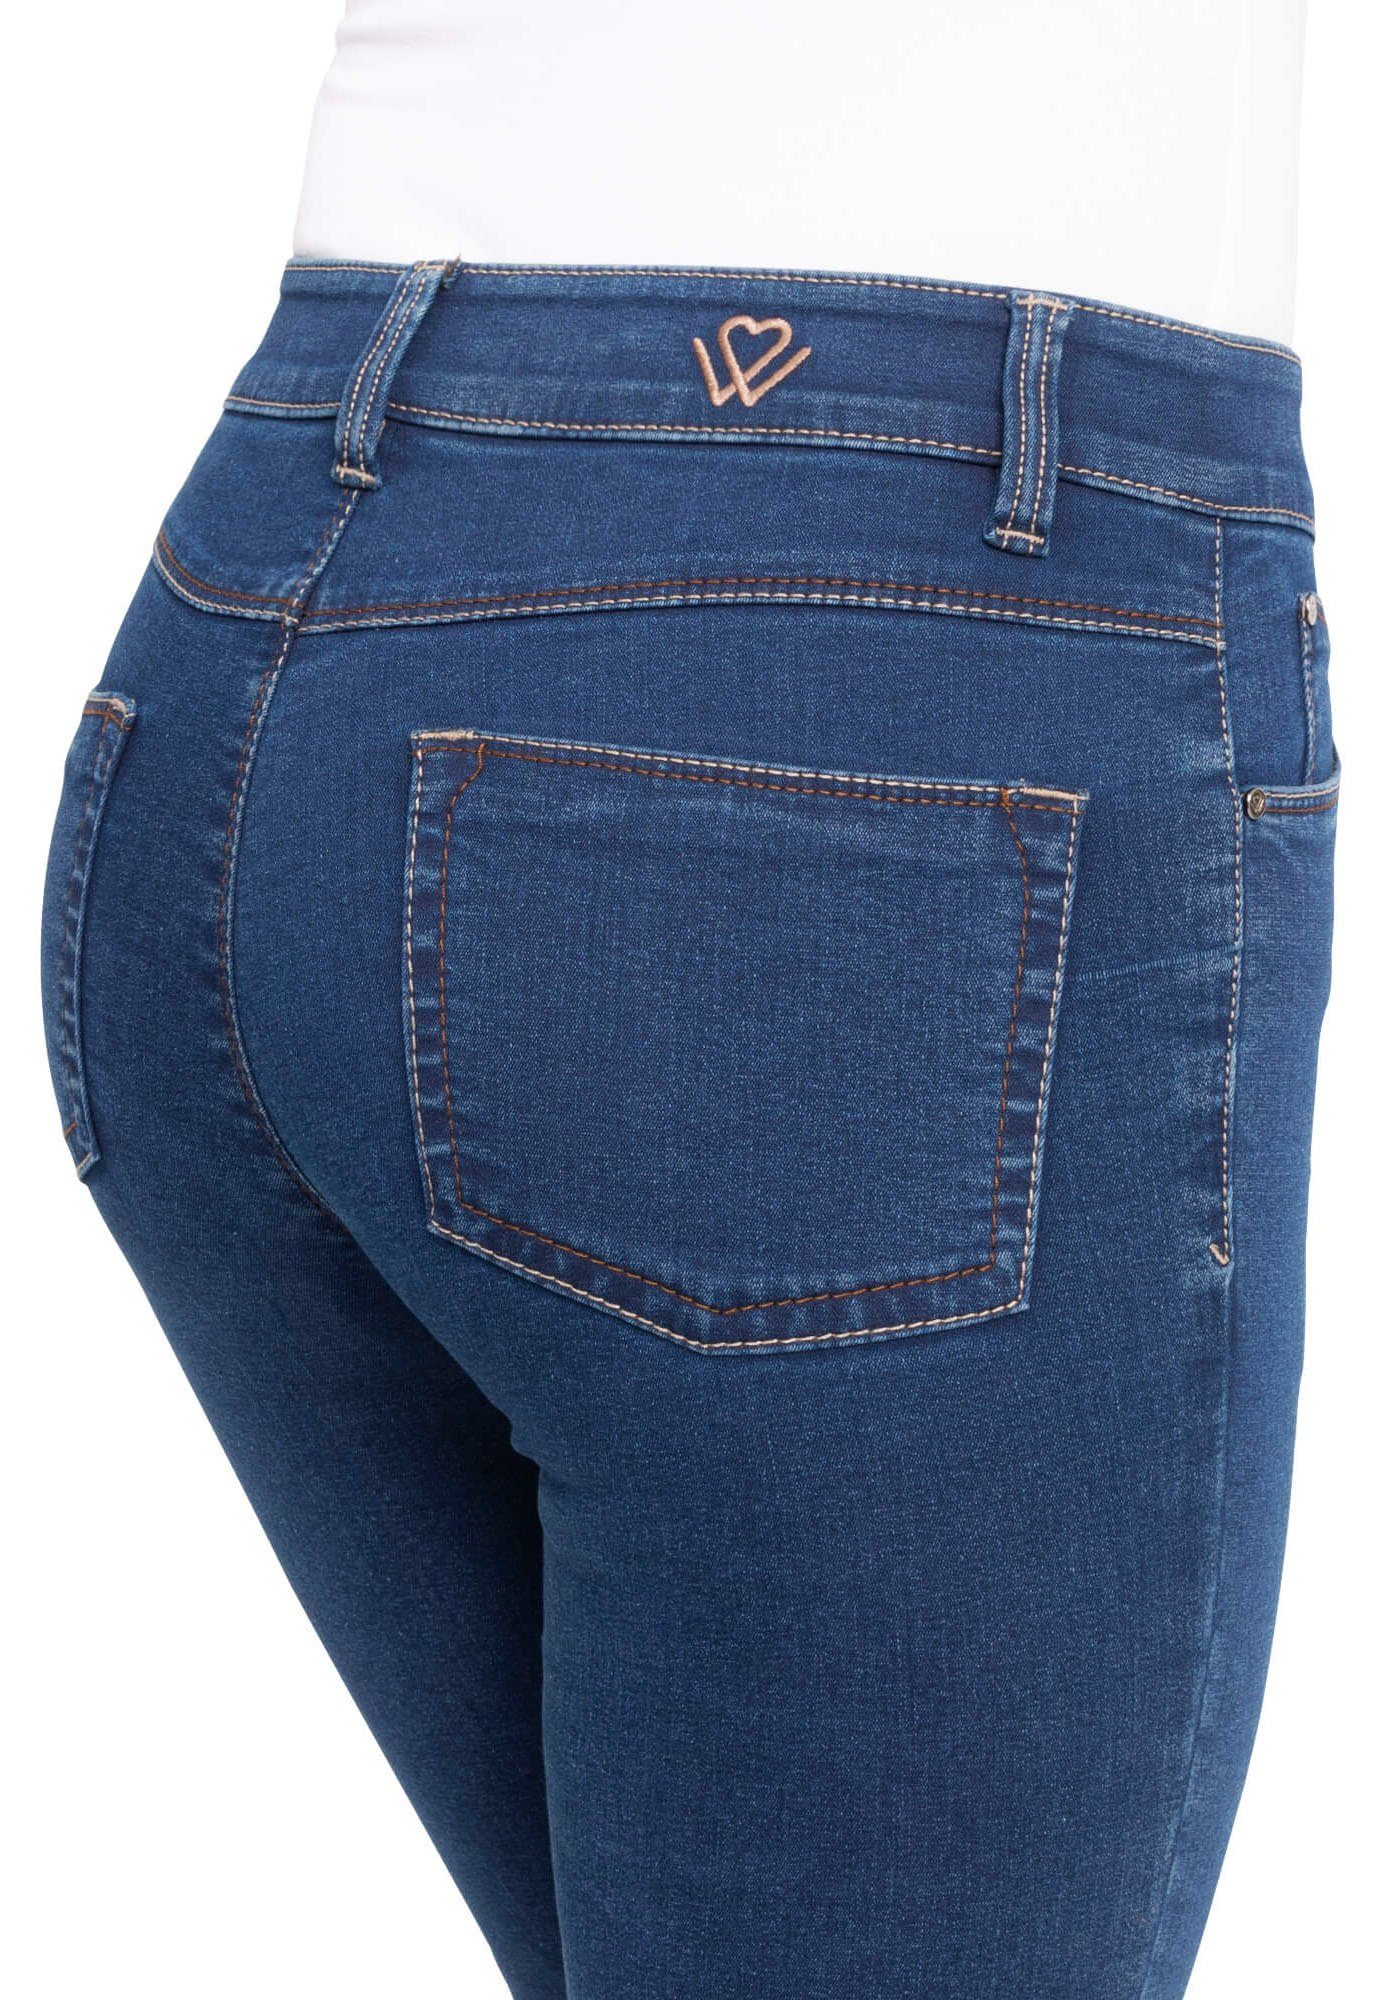 wonderjeans Slim-fit-Jeans Classic-Slim stone Schnitt washed gerader Klassischer blue